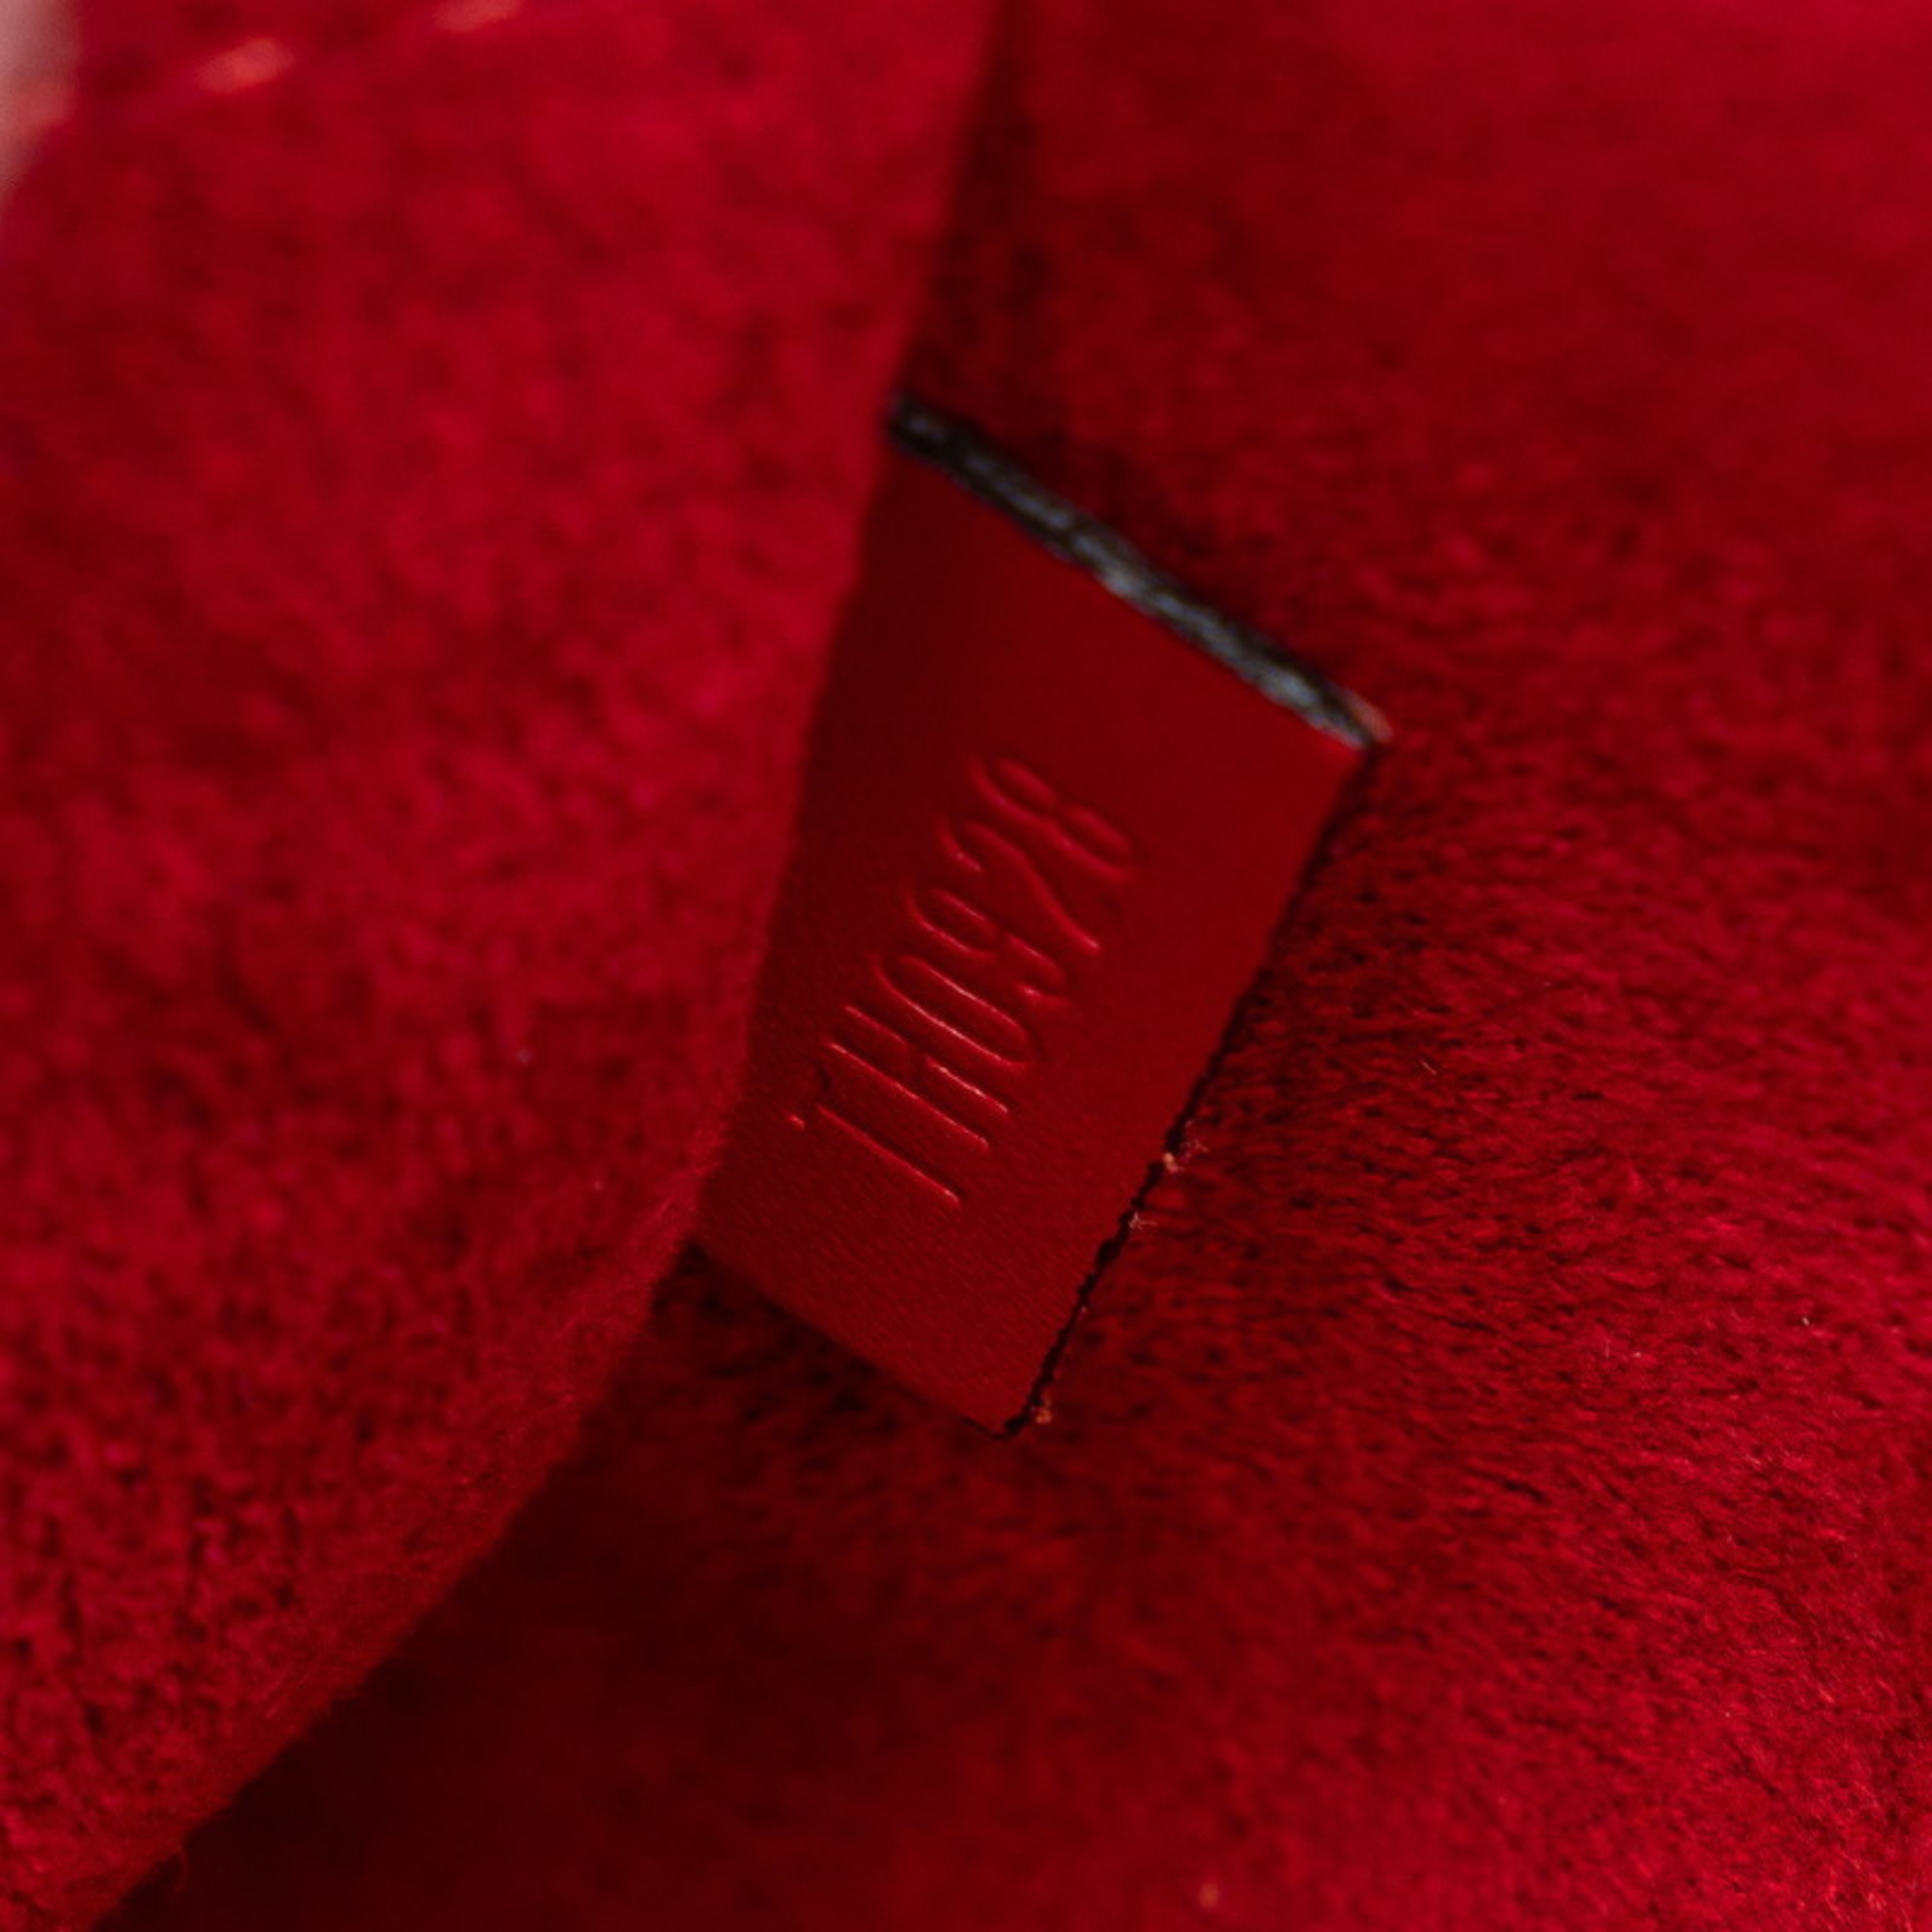 Louis Vuitton Epi Jasmine Handbag M52087 Castilian Red Leather Women's LOUIS VUITTON